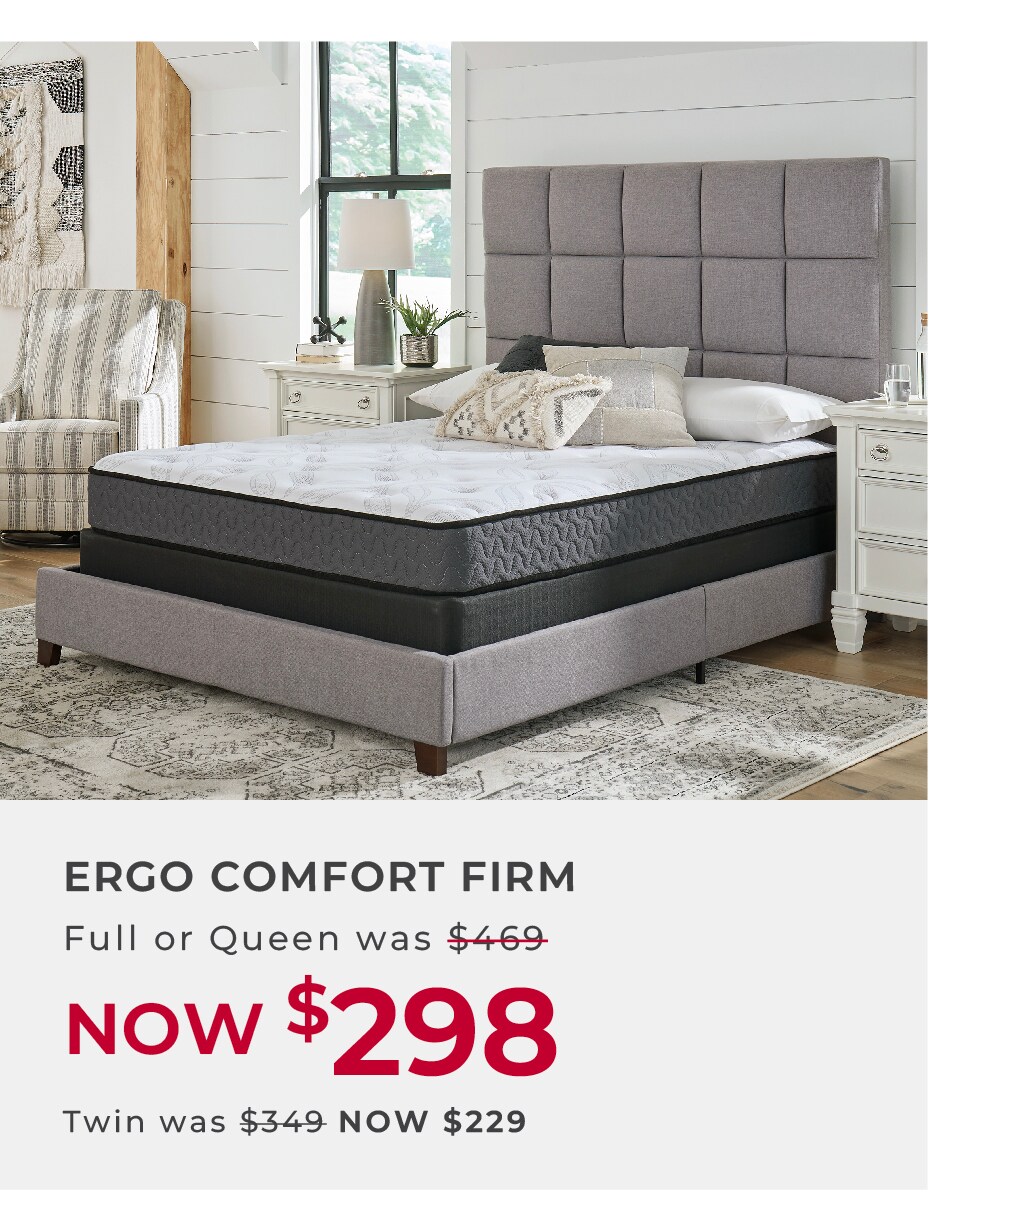 Shop the Ergo comfort firm deals.